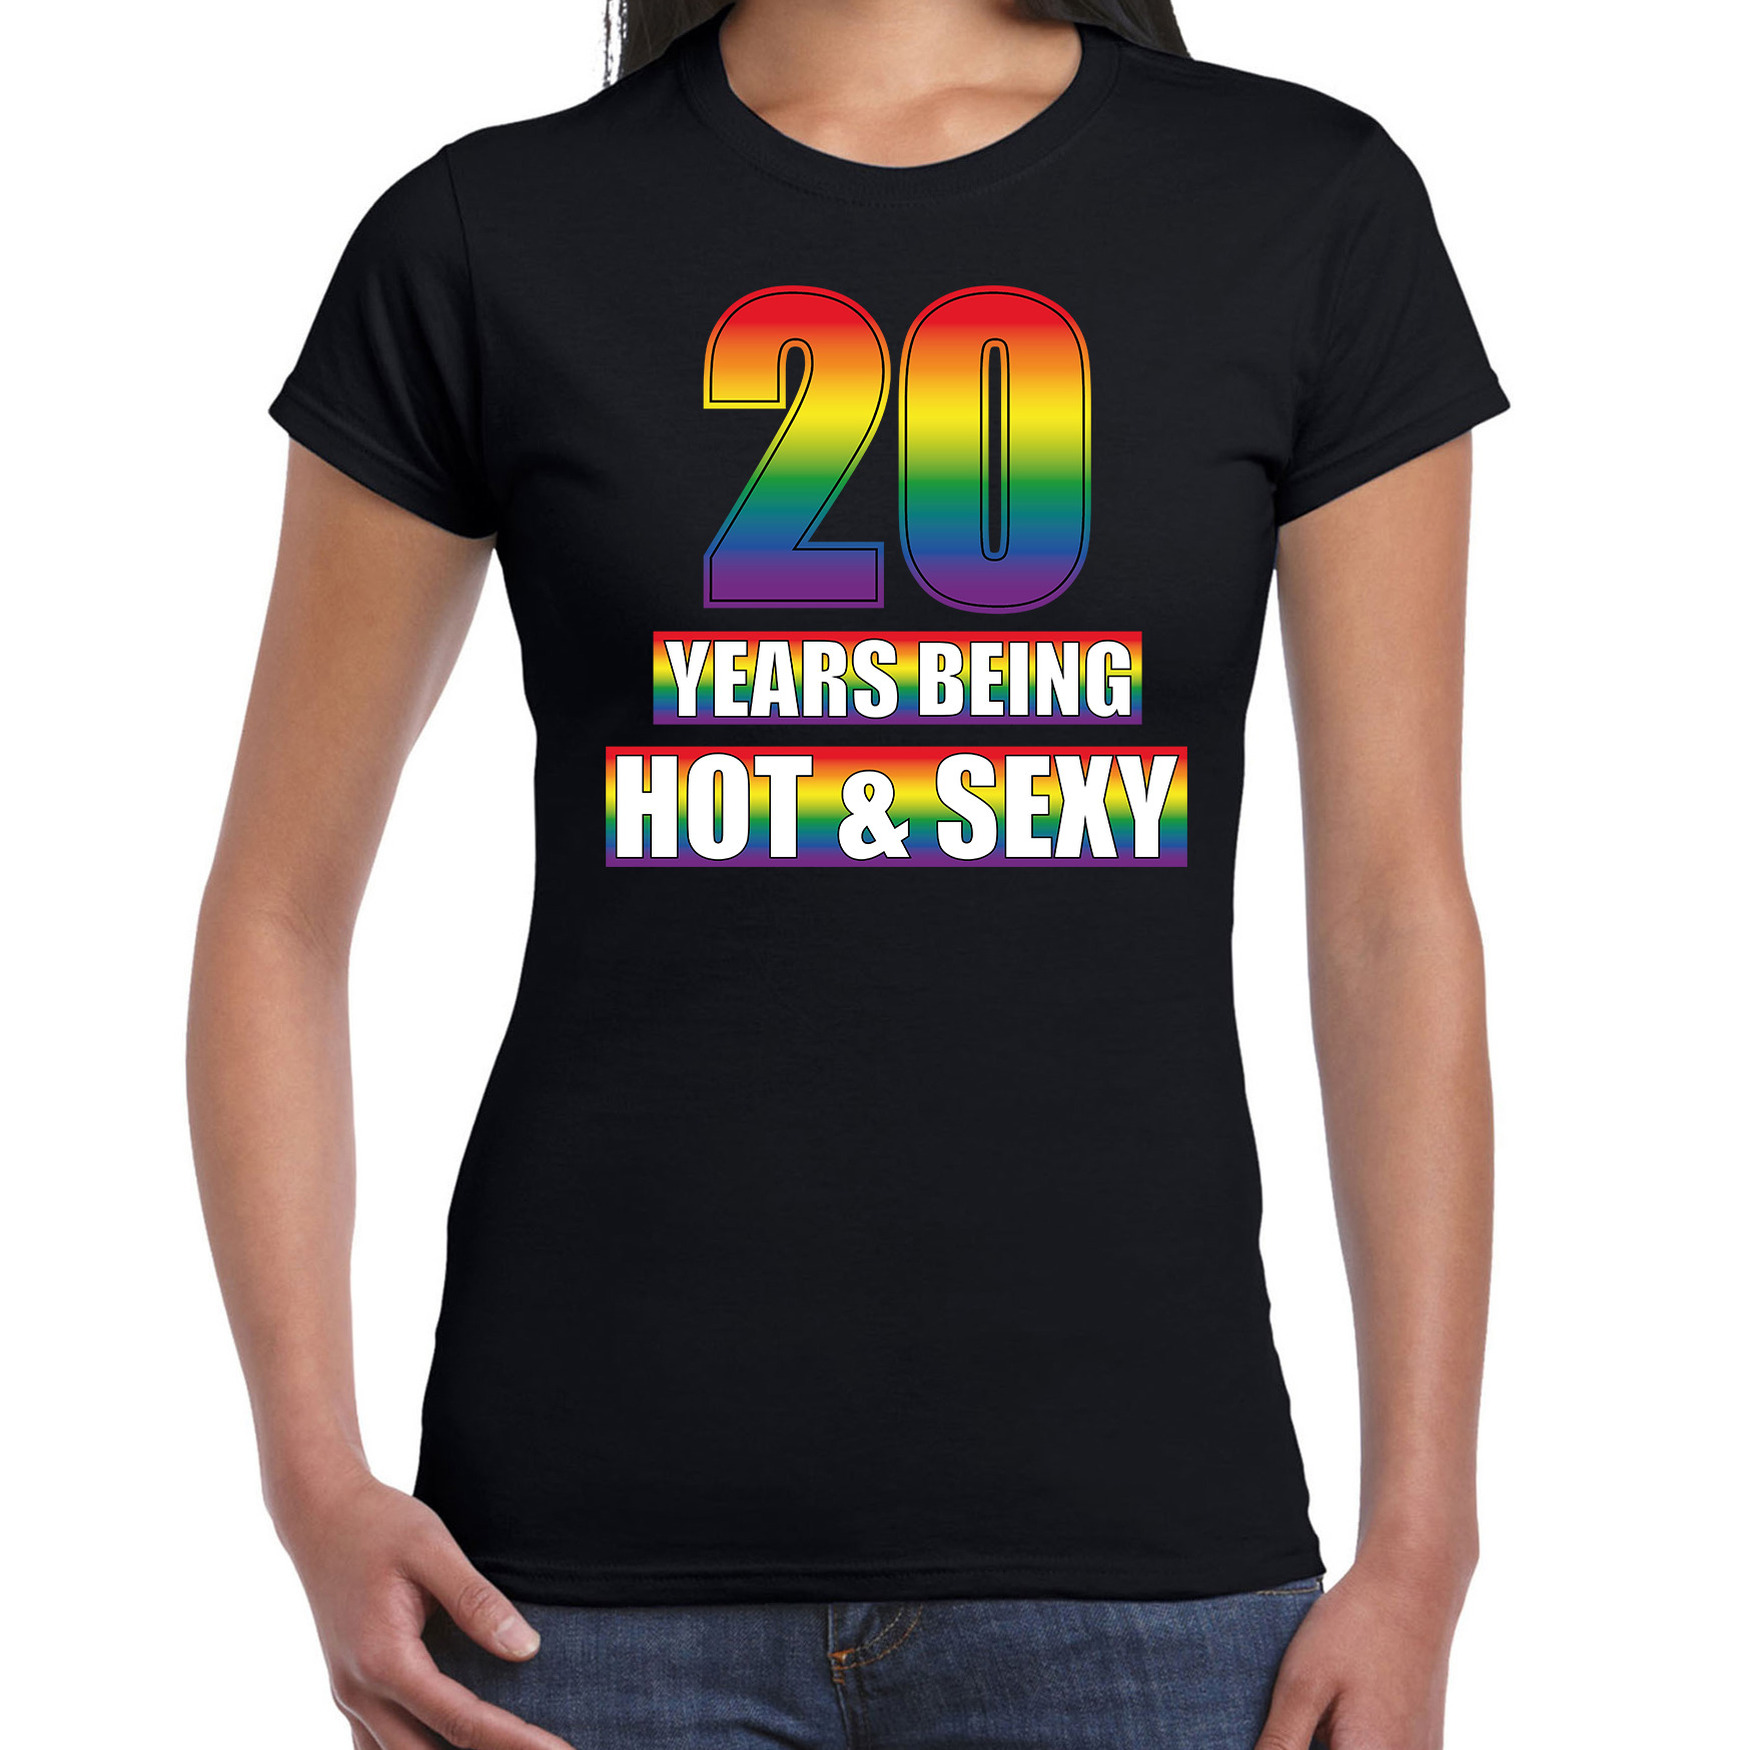 Hot en sexy 20 jaar verjaardag cadeau t-shirt zwart voor dames Gay- LHBT kleding-outfit